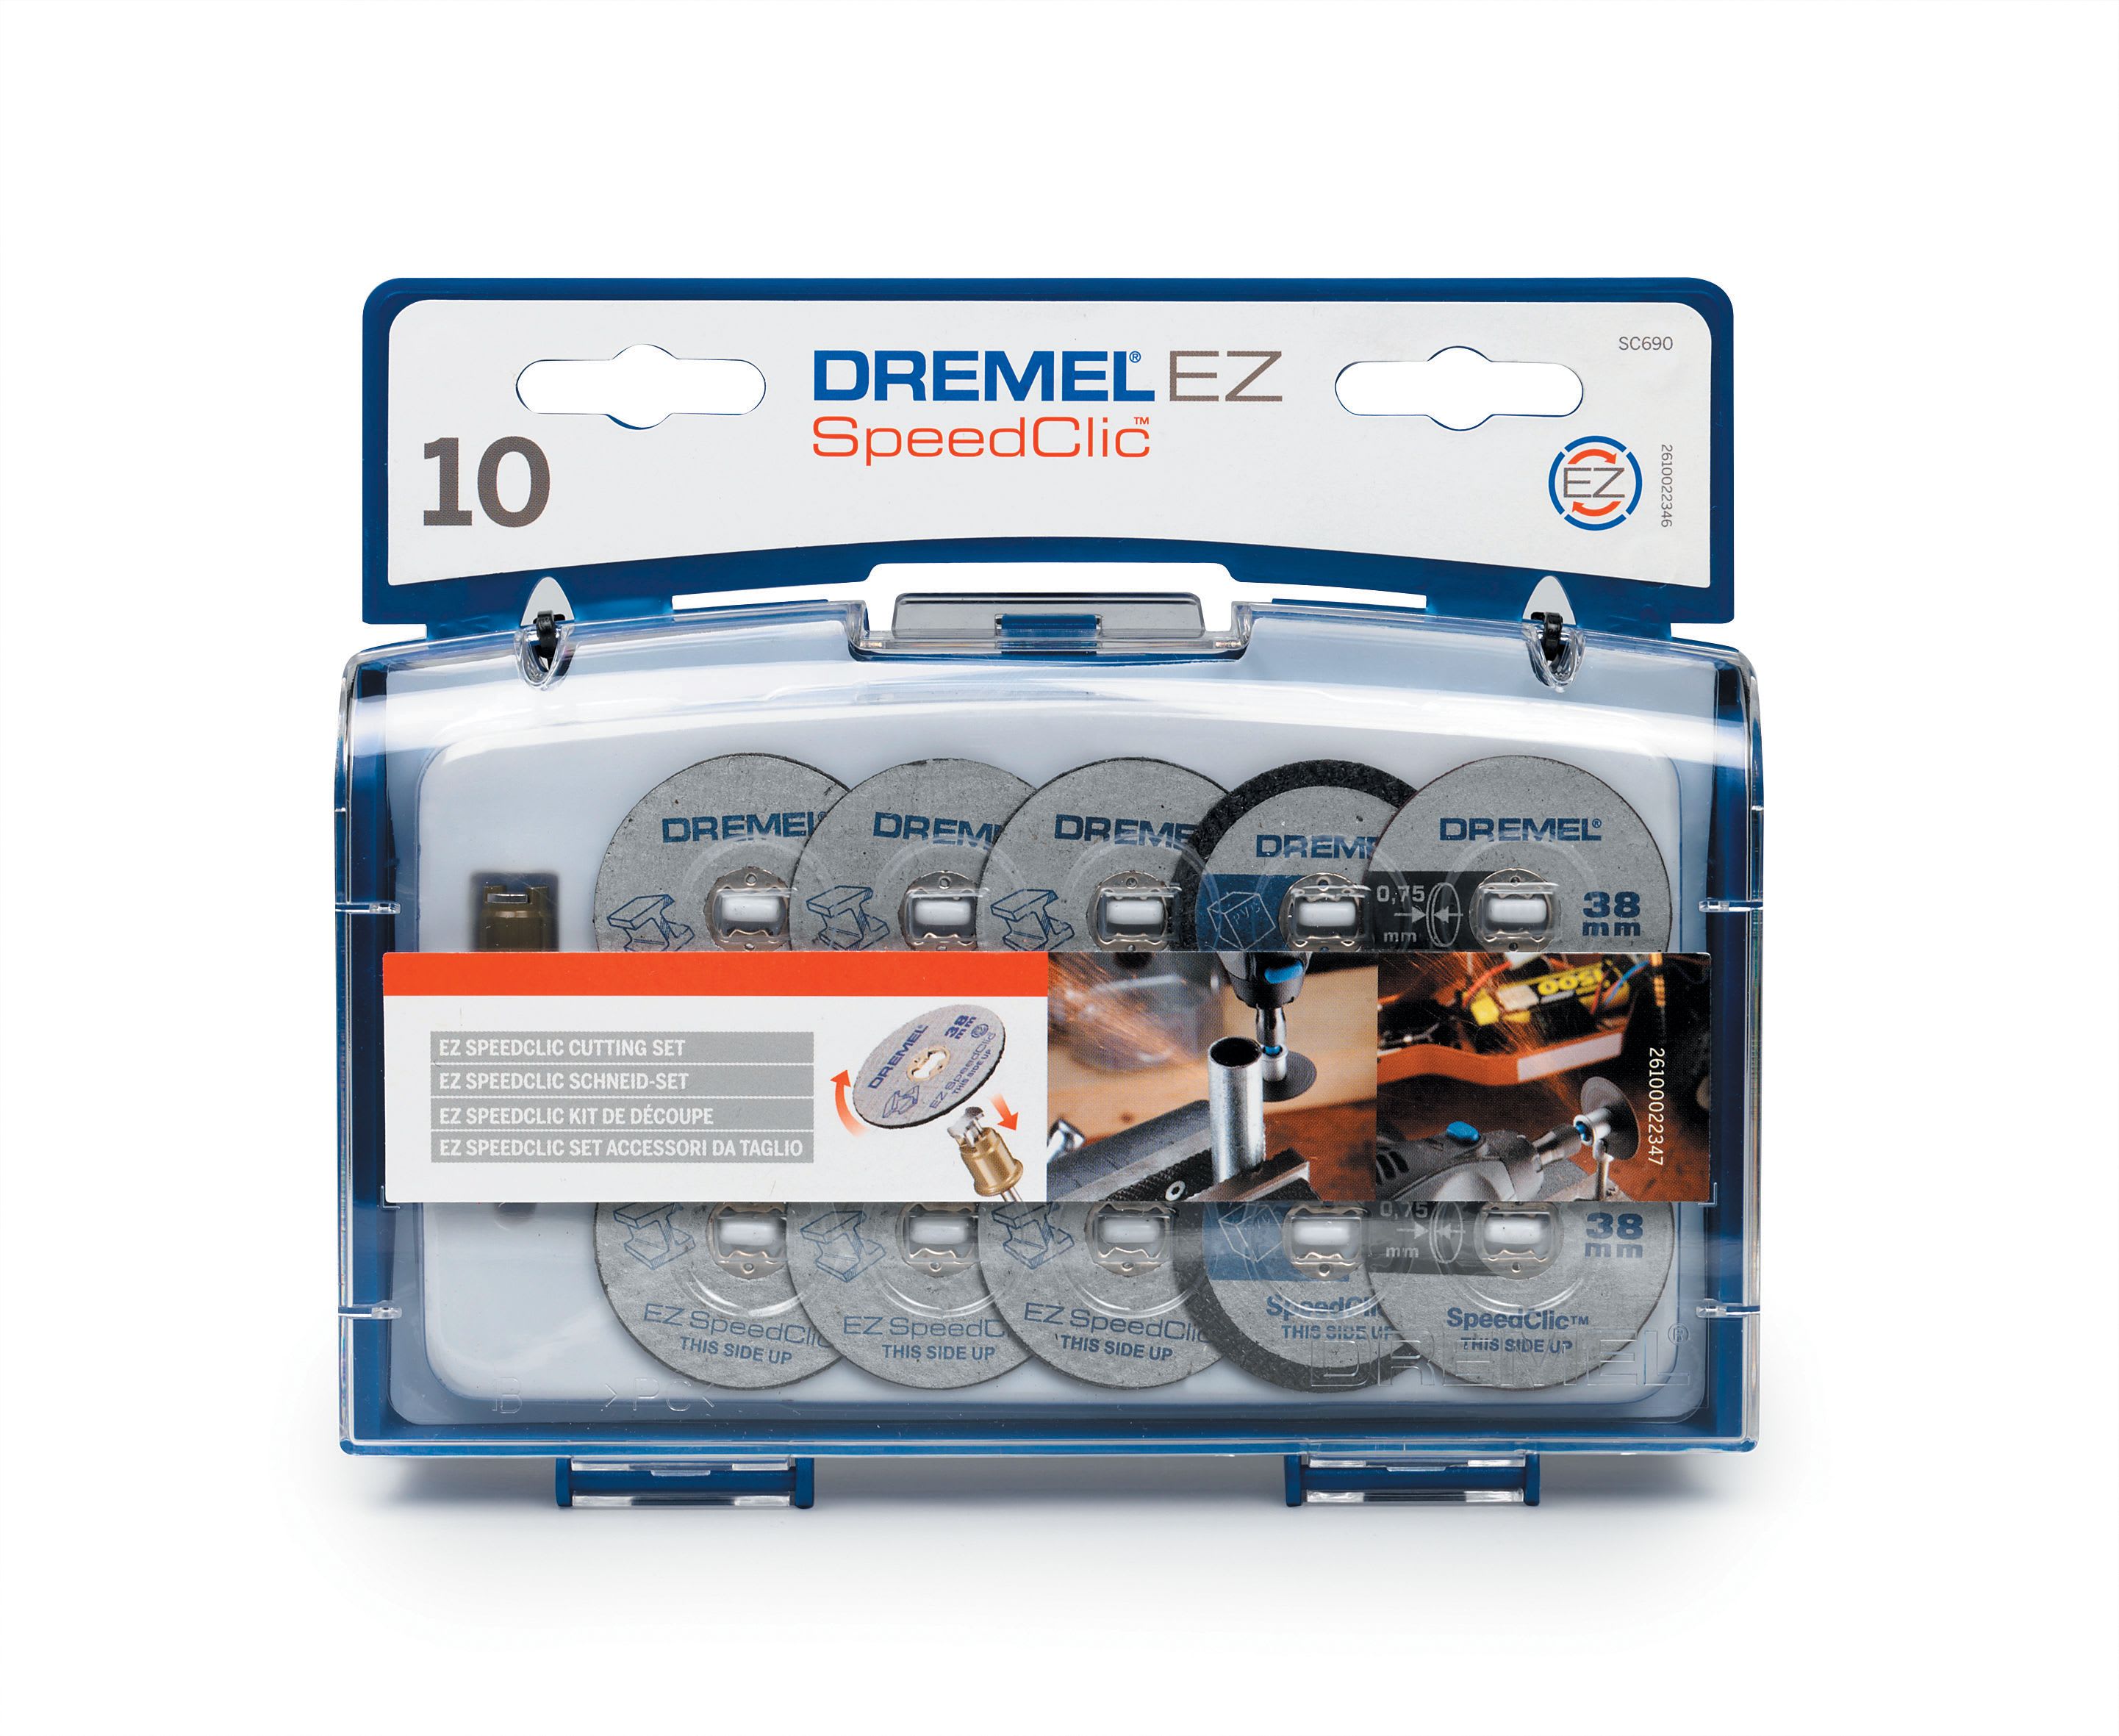 Dremel SC690 10 Piece Cutting Accessory Set